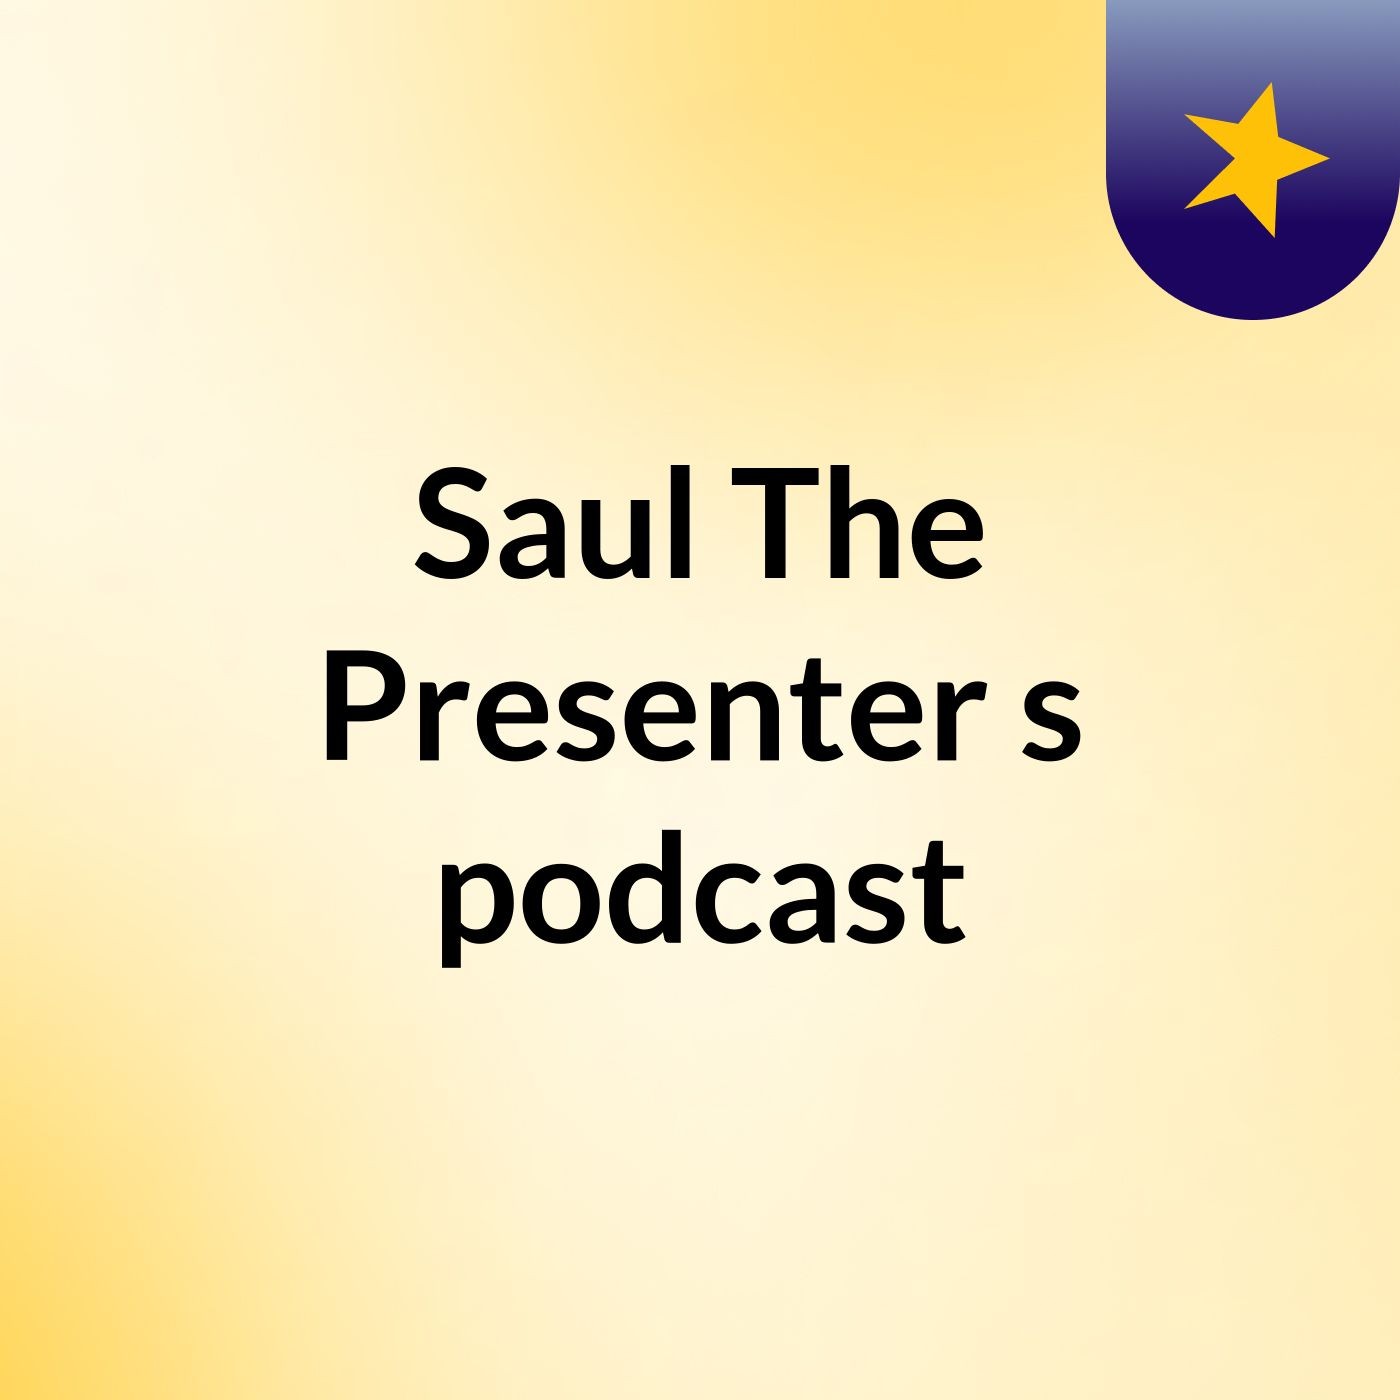 Saul The Presenter's podcast